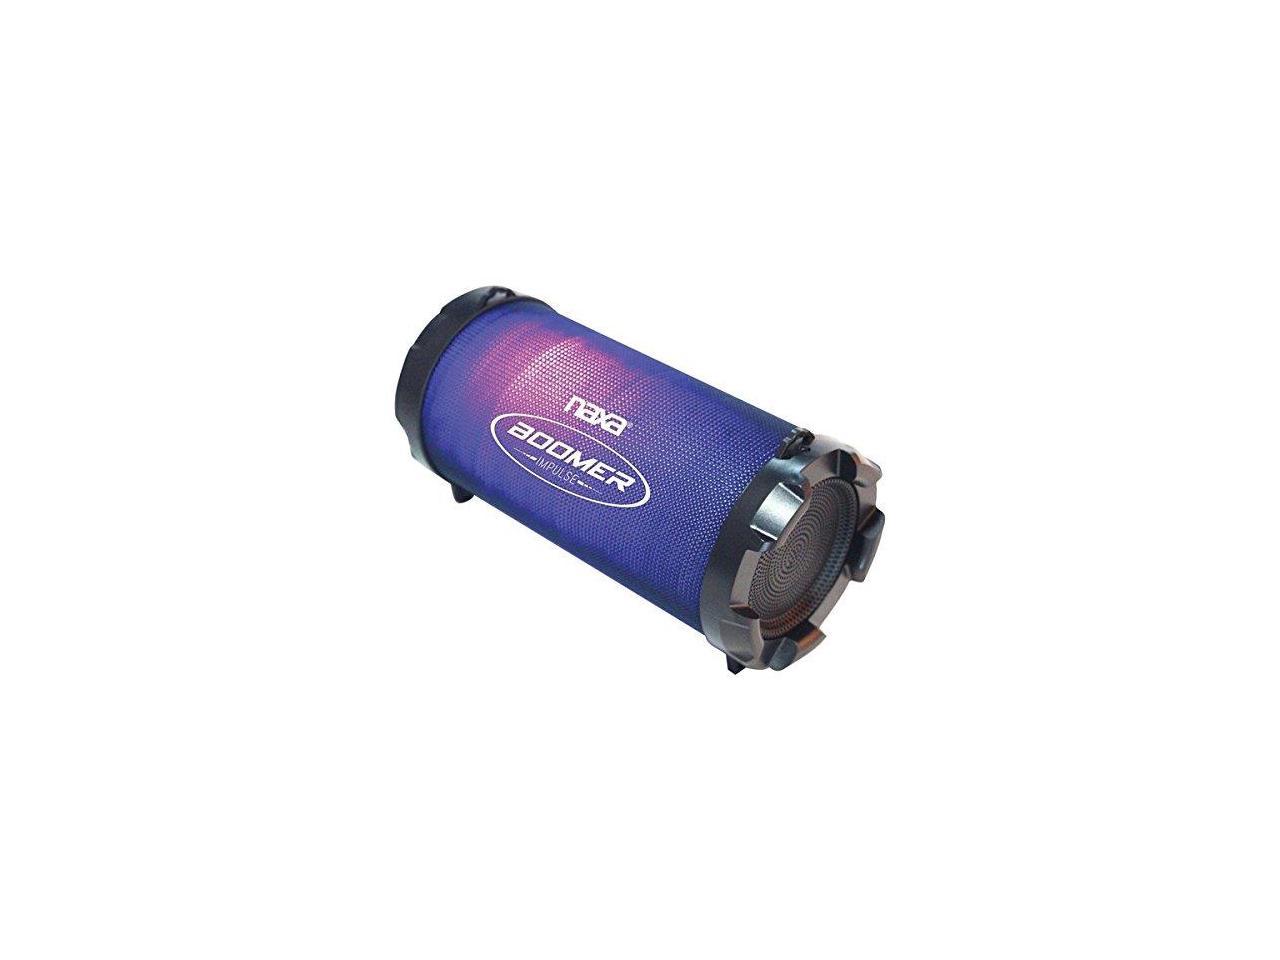 Naxa Electronics NAS-3087 Boomer Impulse Flash Bluetooth Boombox with LED Lights Black